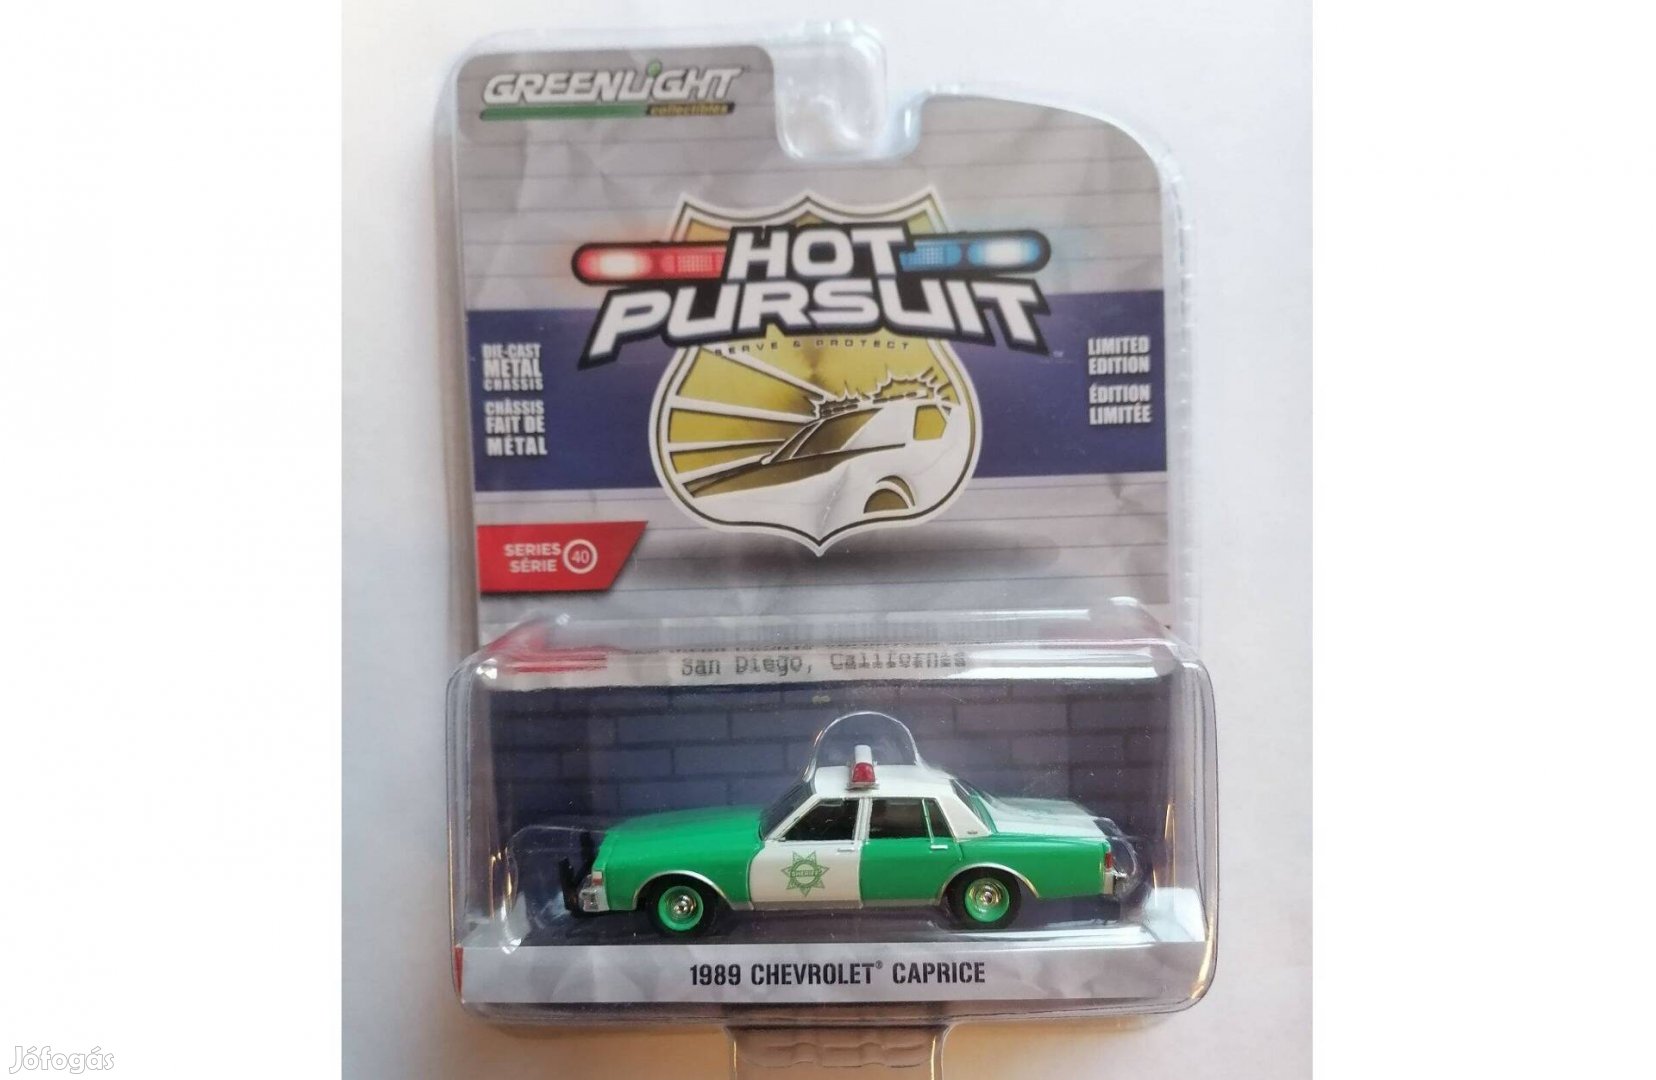 Greenlight Hot Pursuit 1989 chevrolet caprice